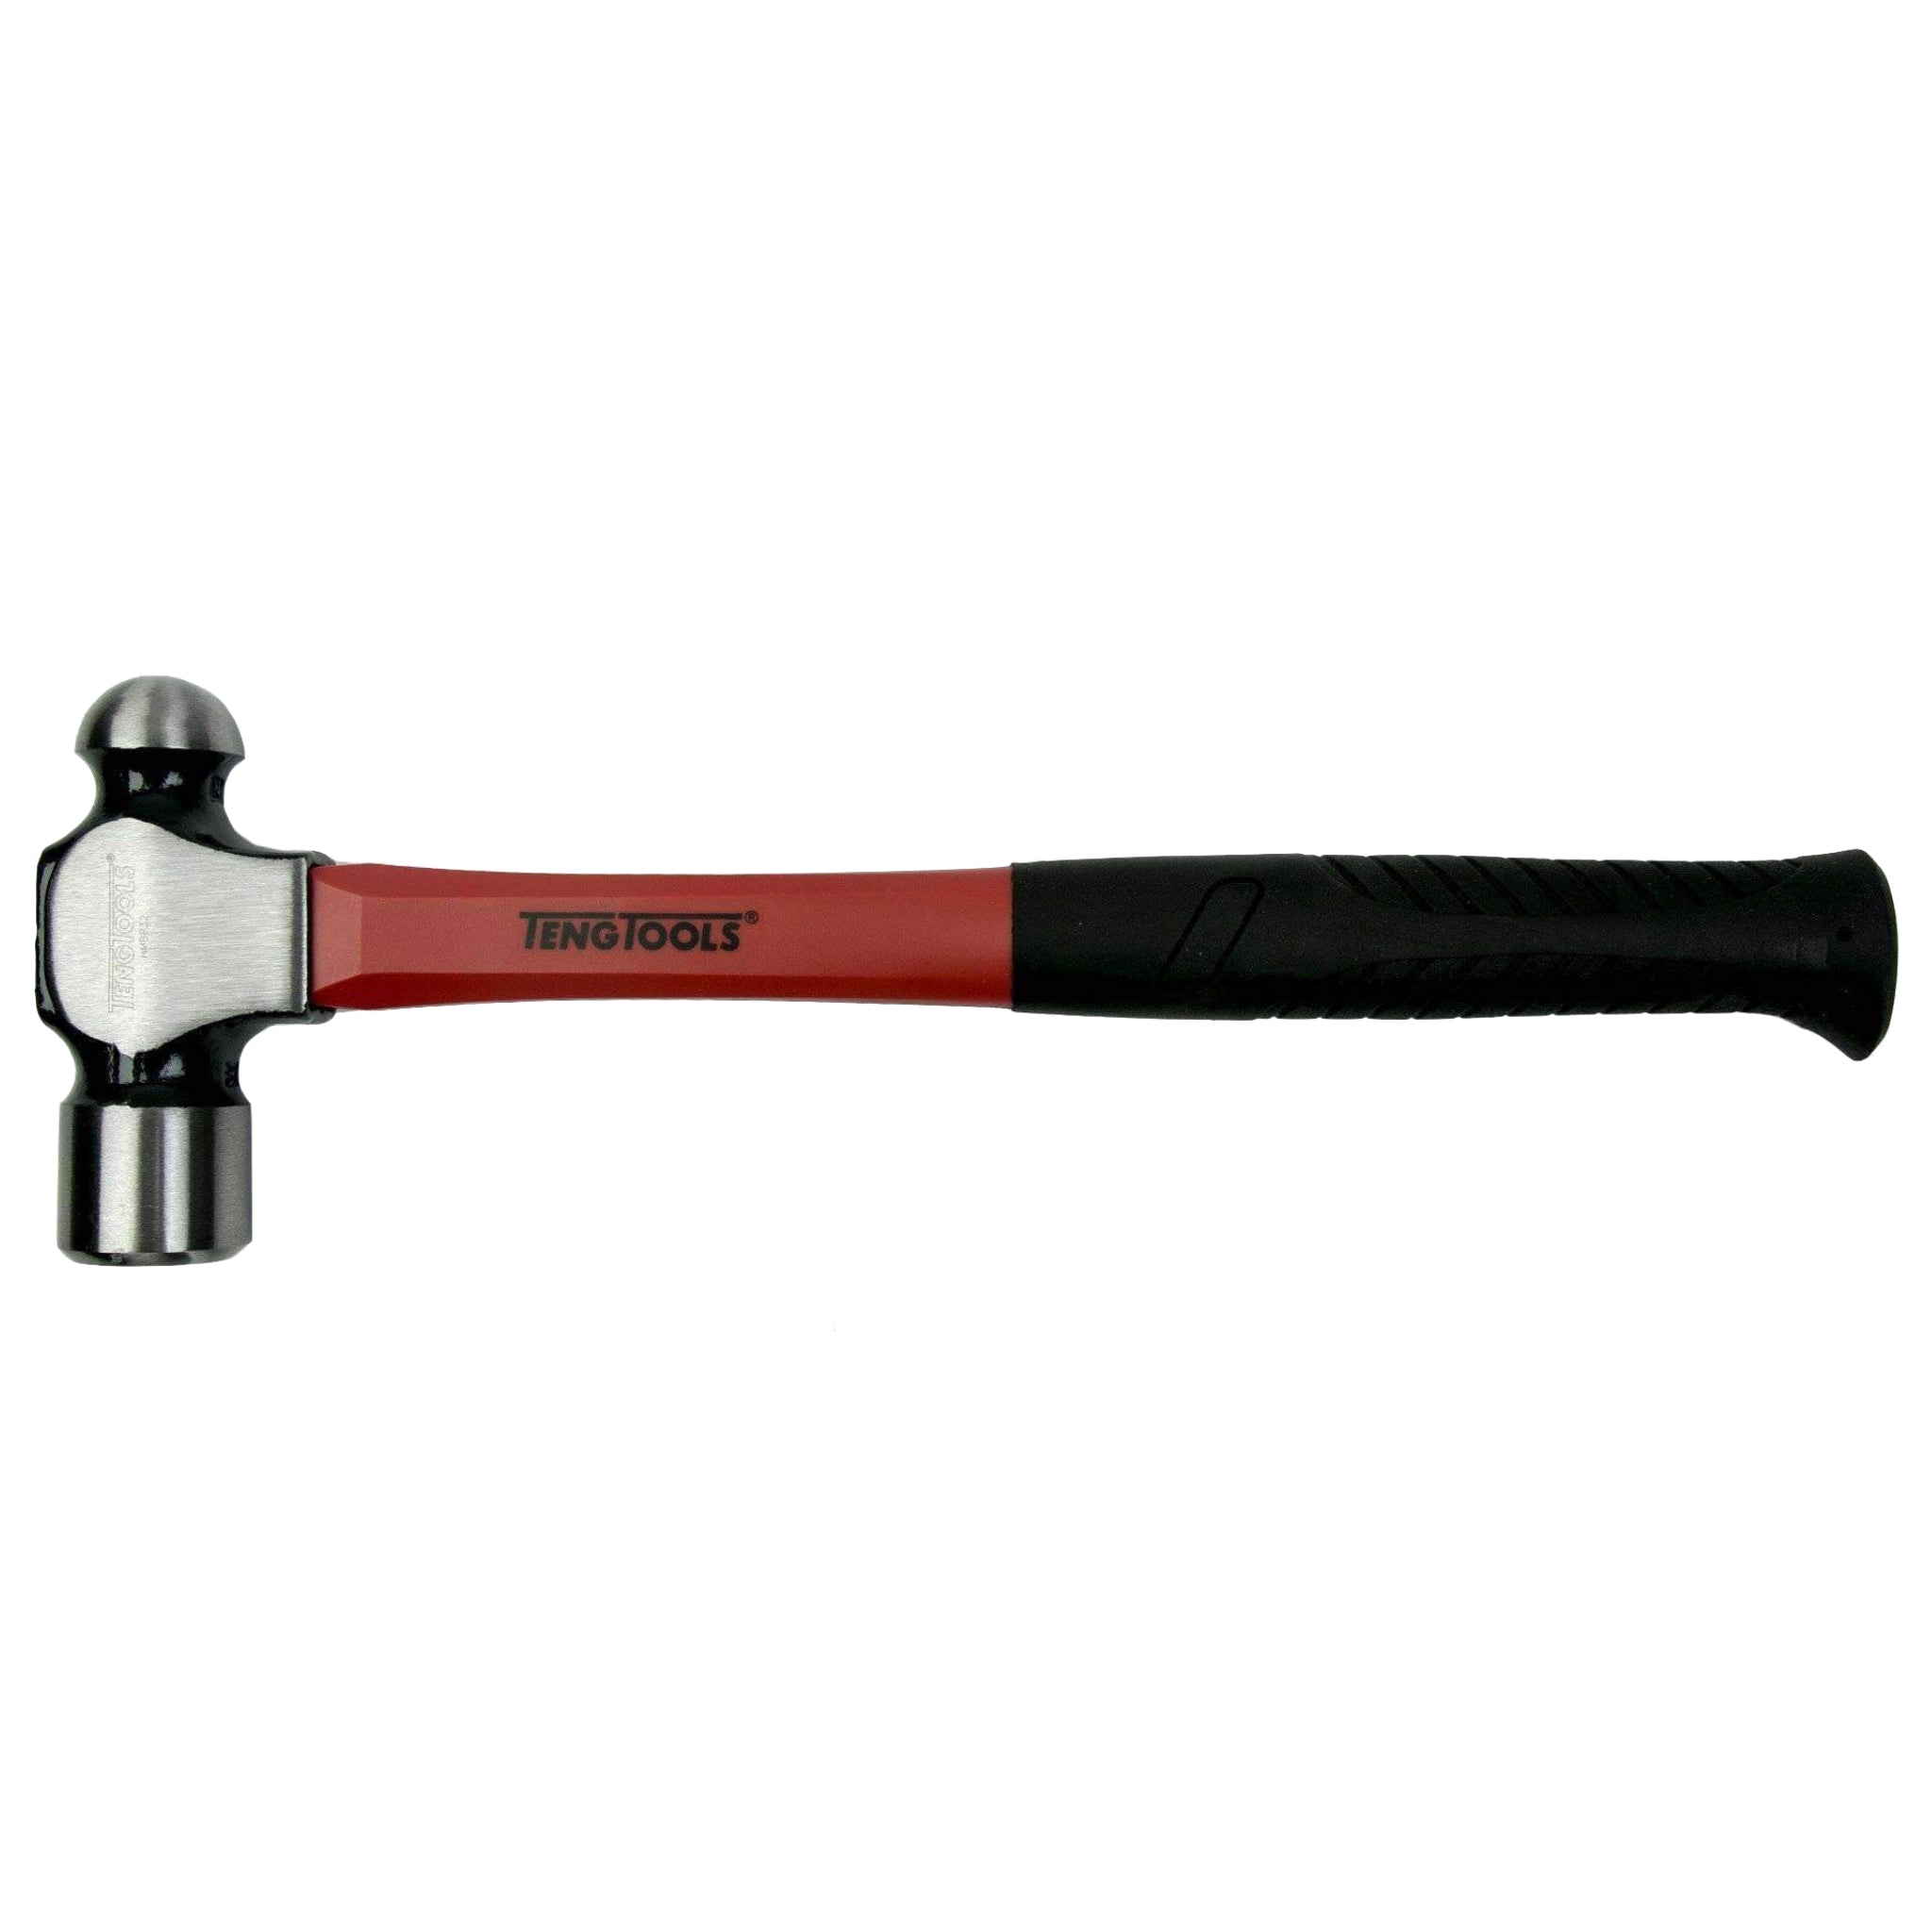 Teng Tools Ball Pein Hammer Range 12, 16, 24 And 32 Ounce (Oz) Hammers - 32 Oz